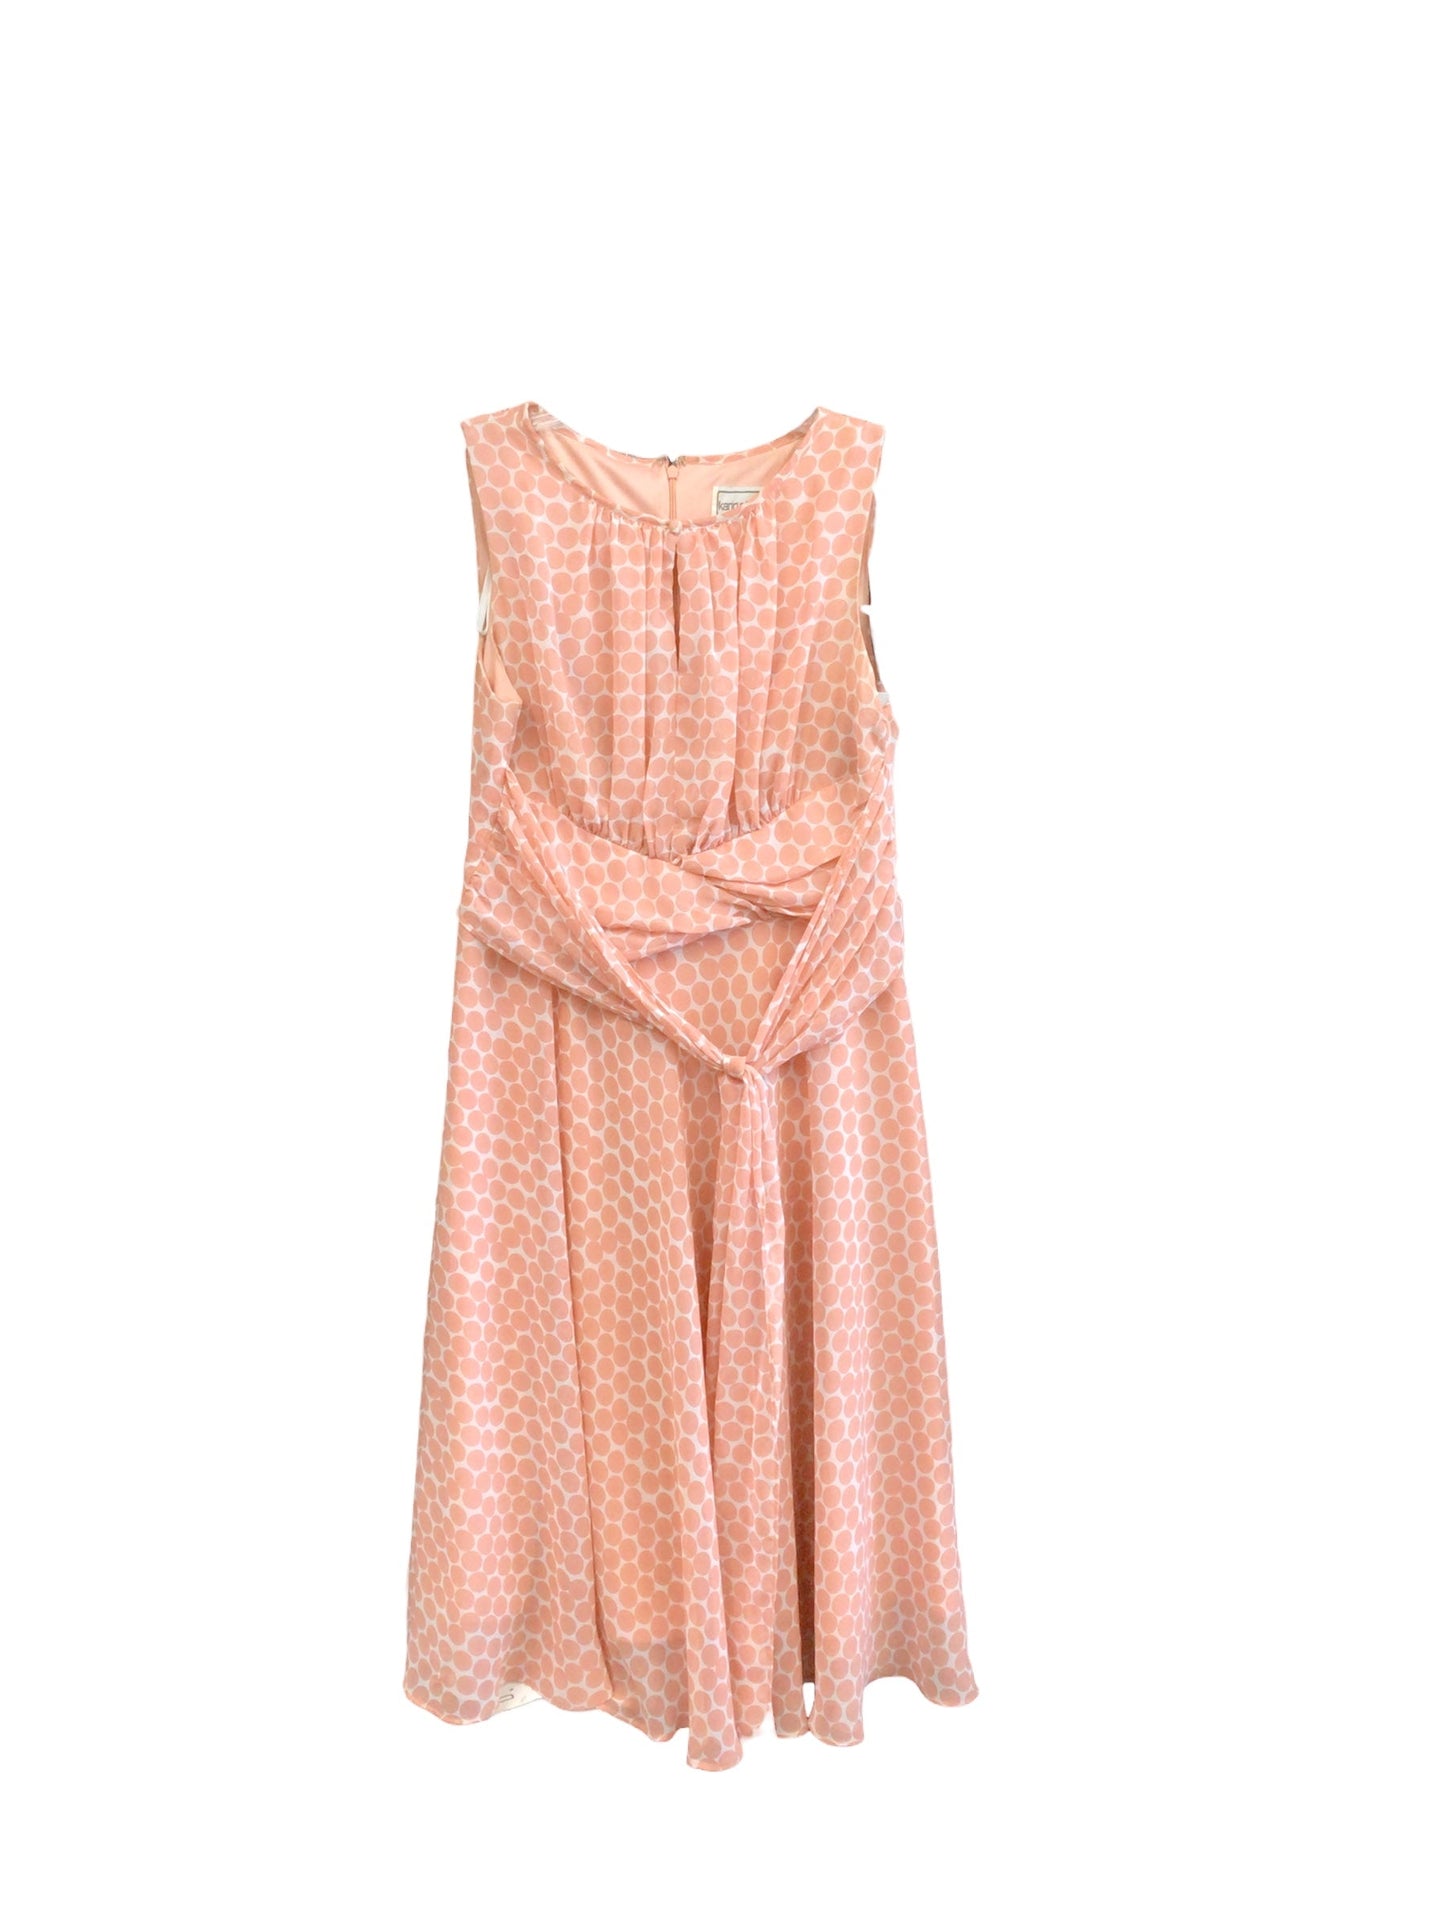 Dress Casual Short By Karin Stevens  Size: 12